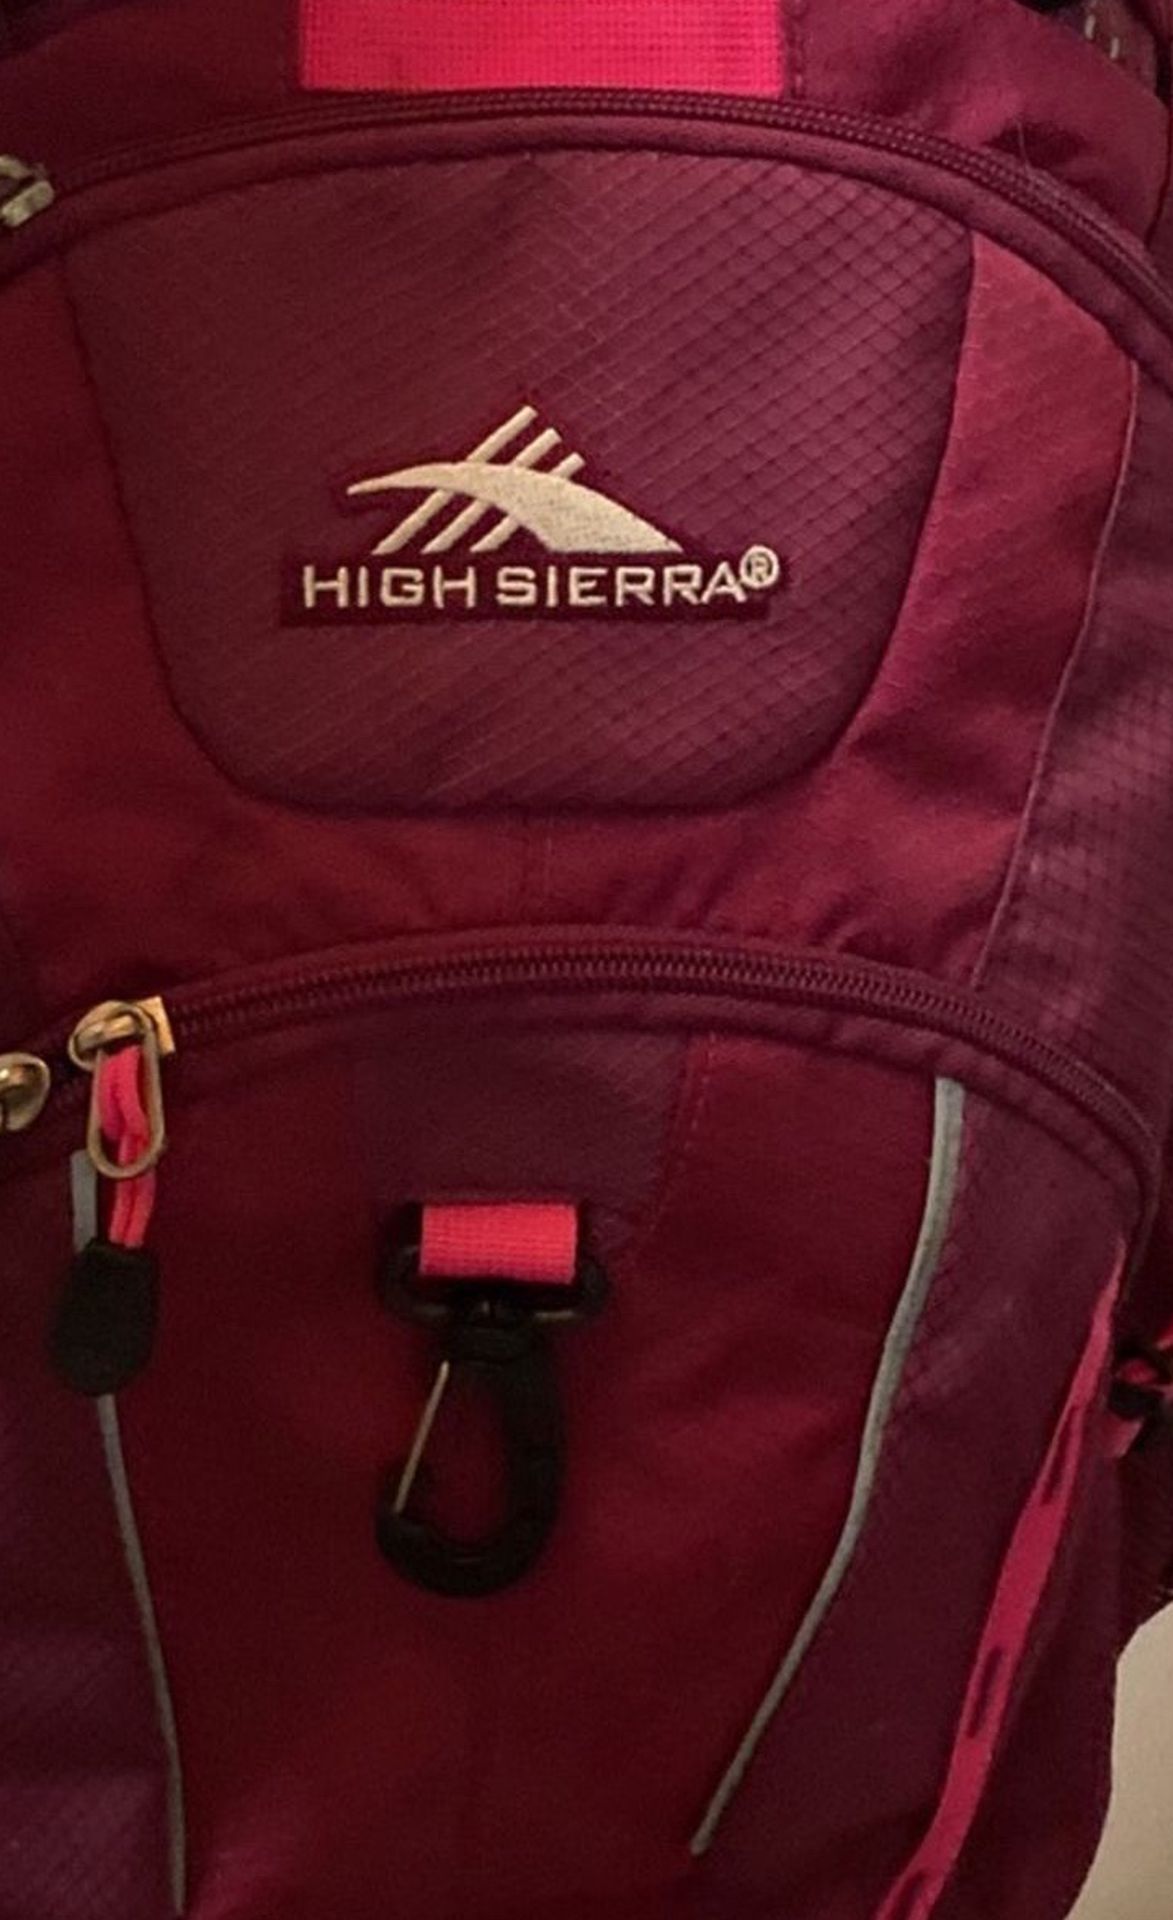 Purple High Sierra Backpack